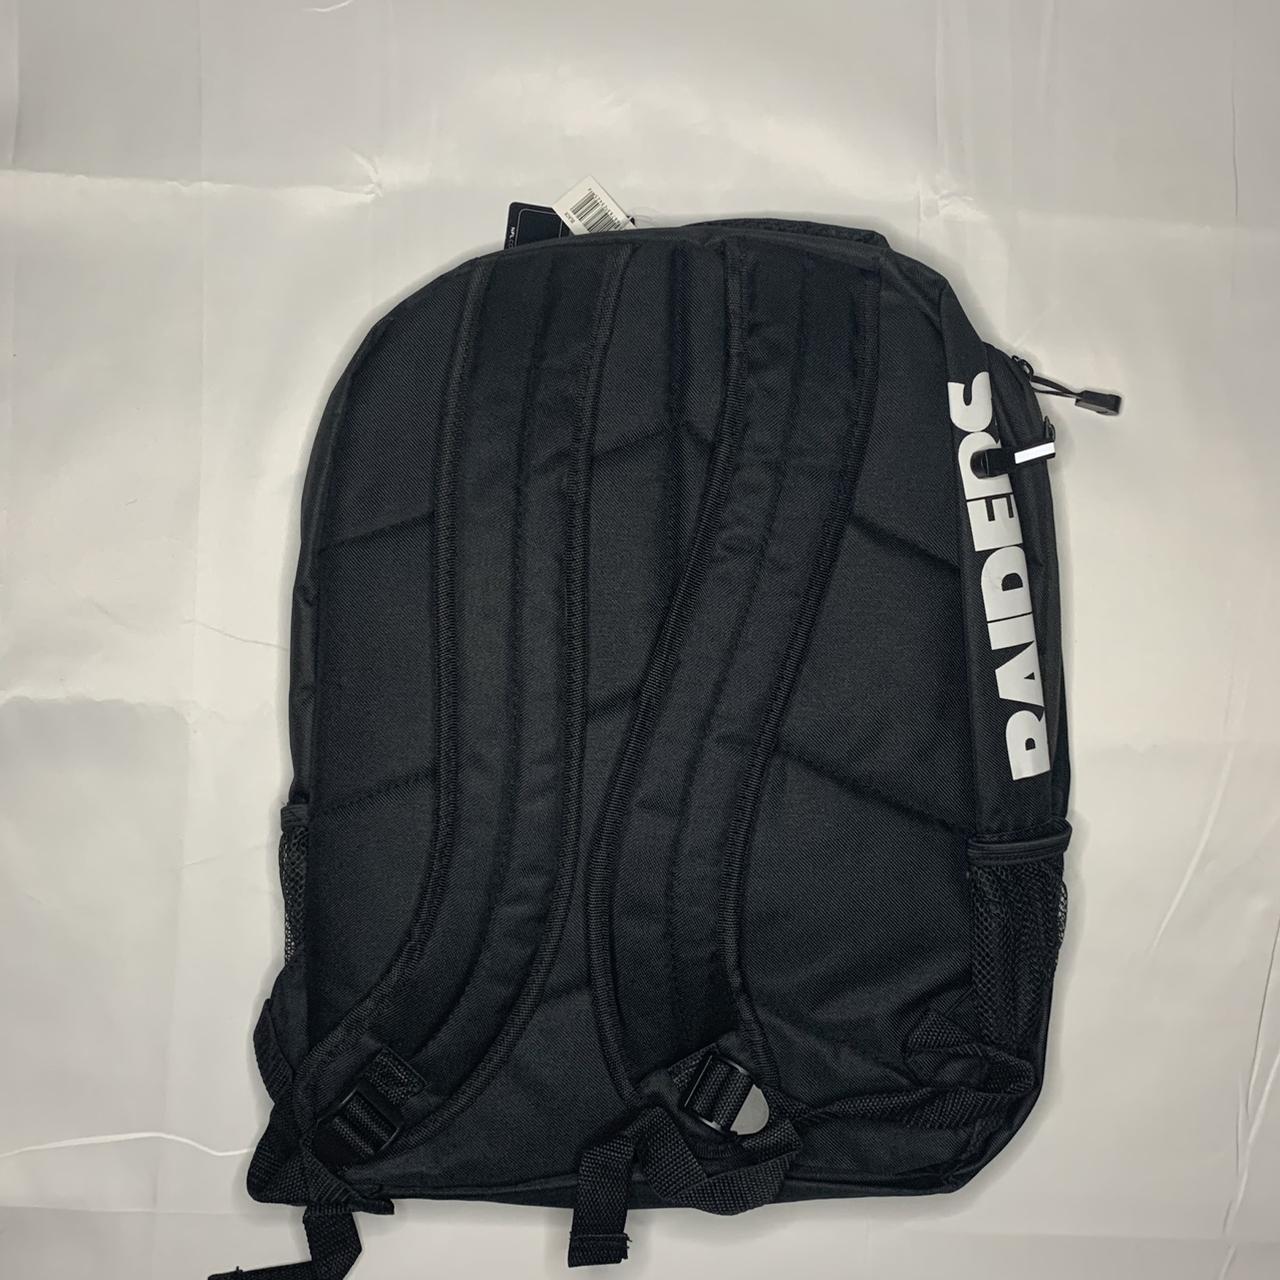 NFL Las Vegas Raiders Patches Mini Backpack BNWT - Depop